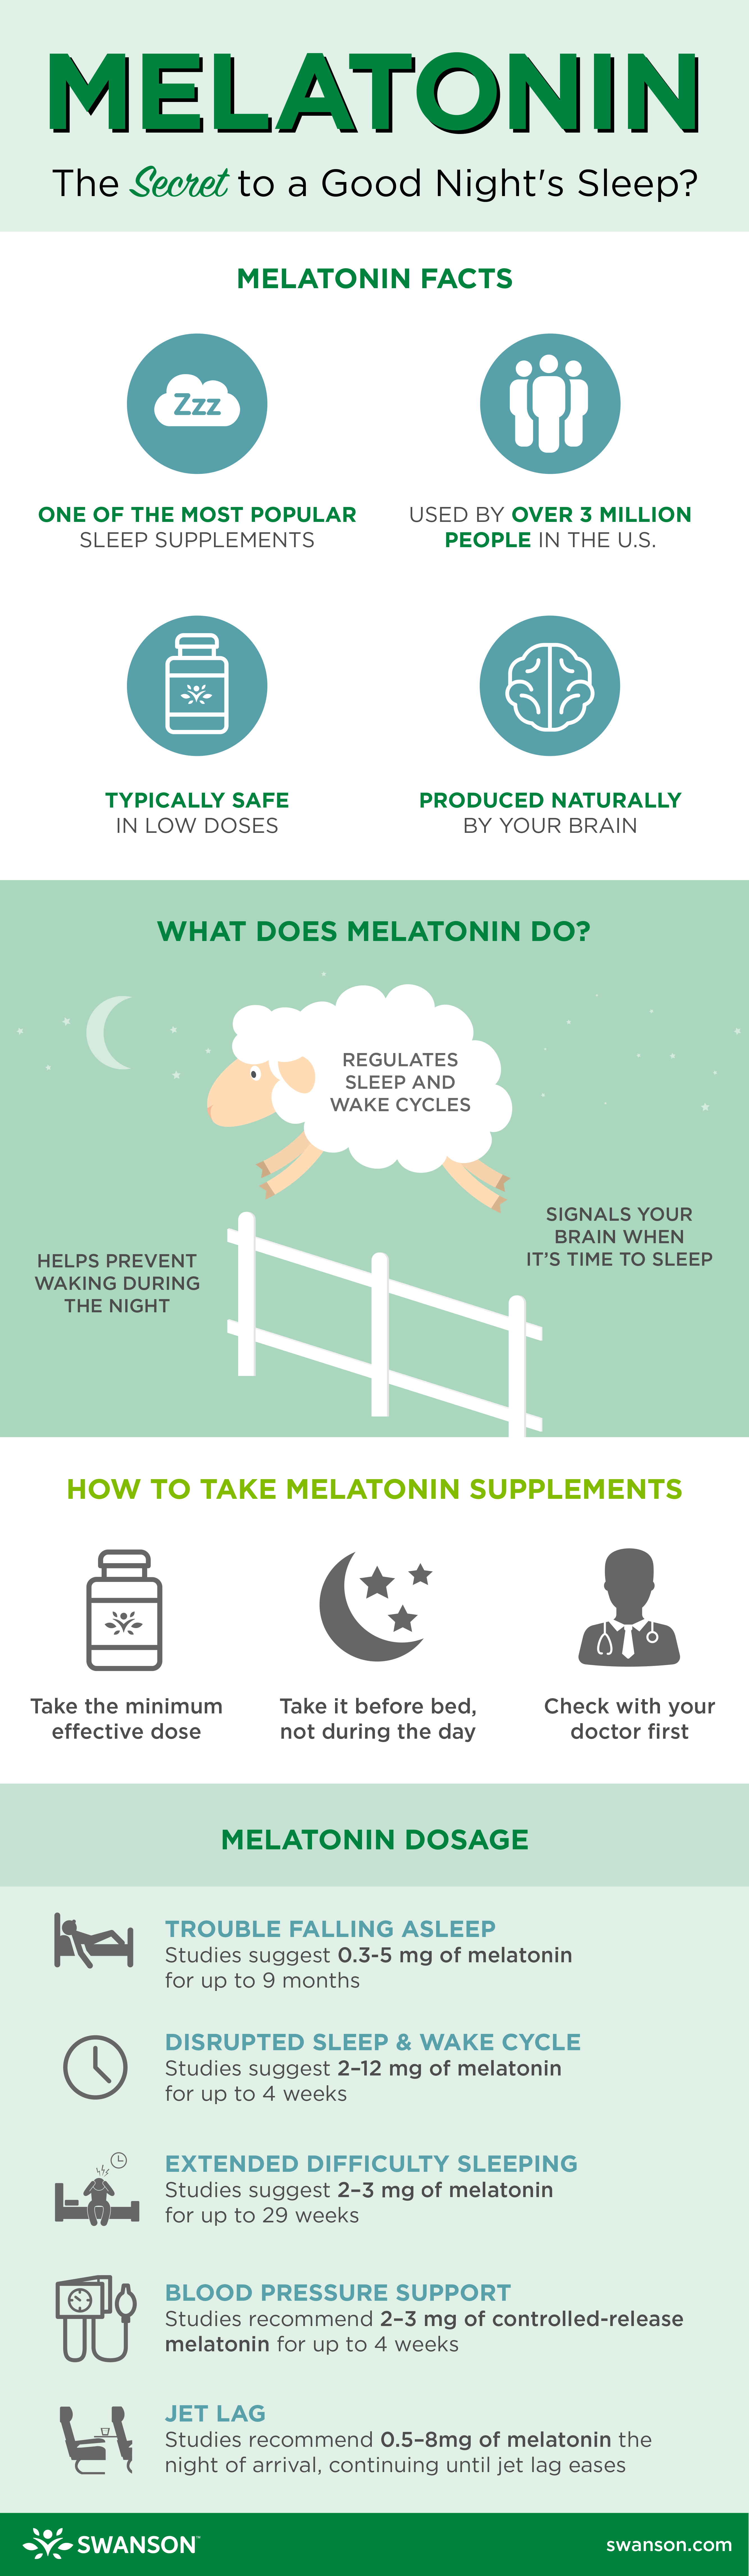 melatonin after age 50